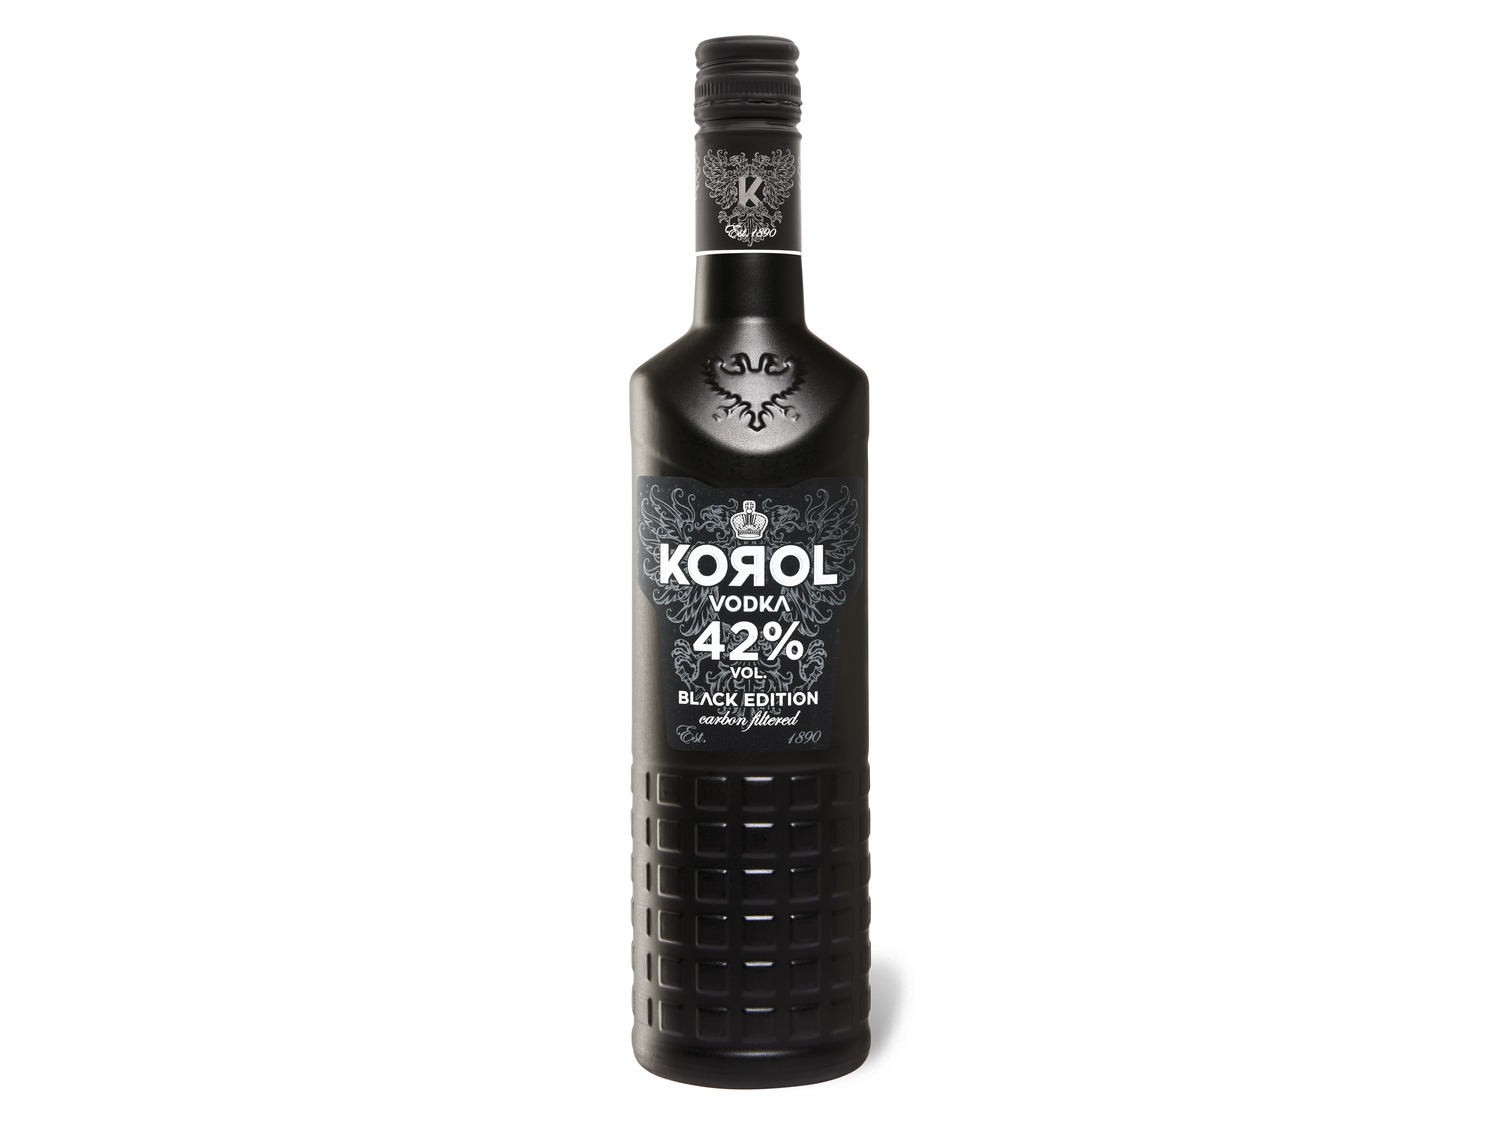 Korol Edition Vol Filtrated Carbon Black Vodka 42%